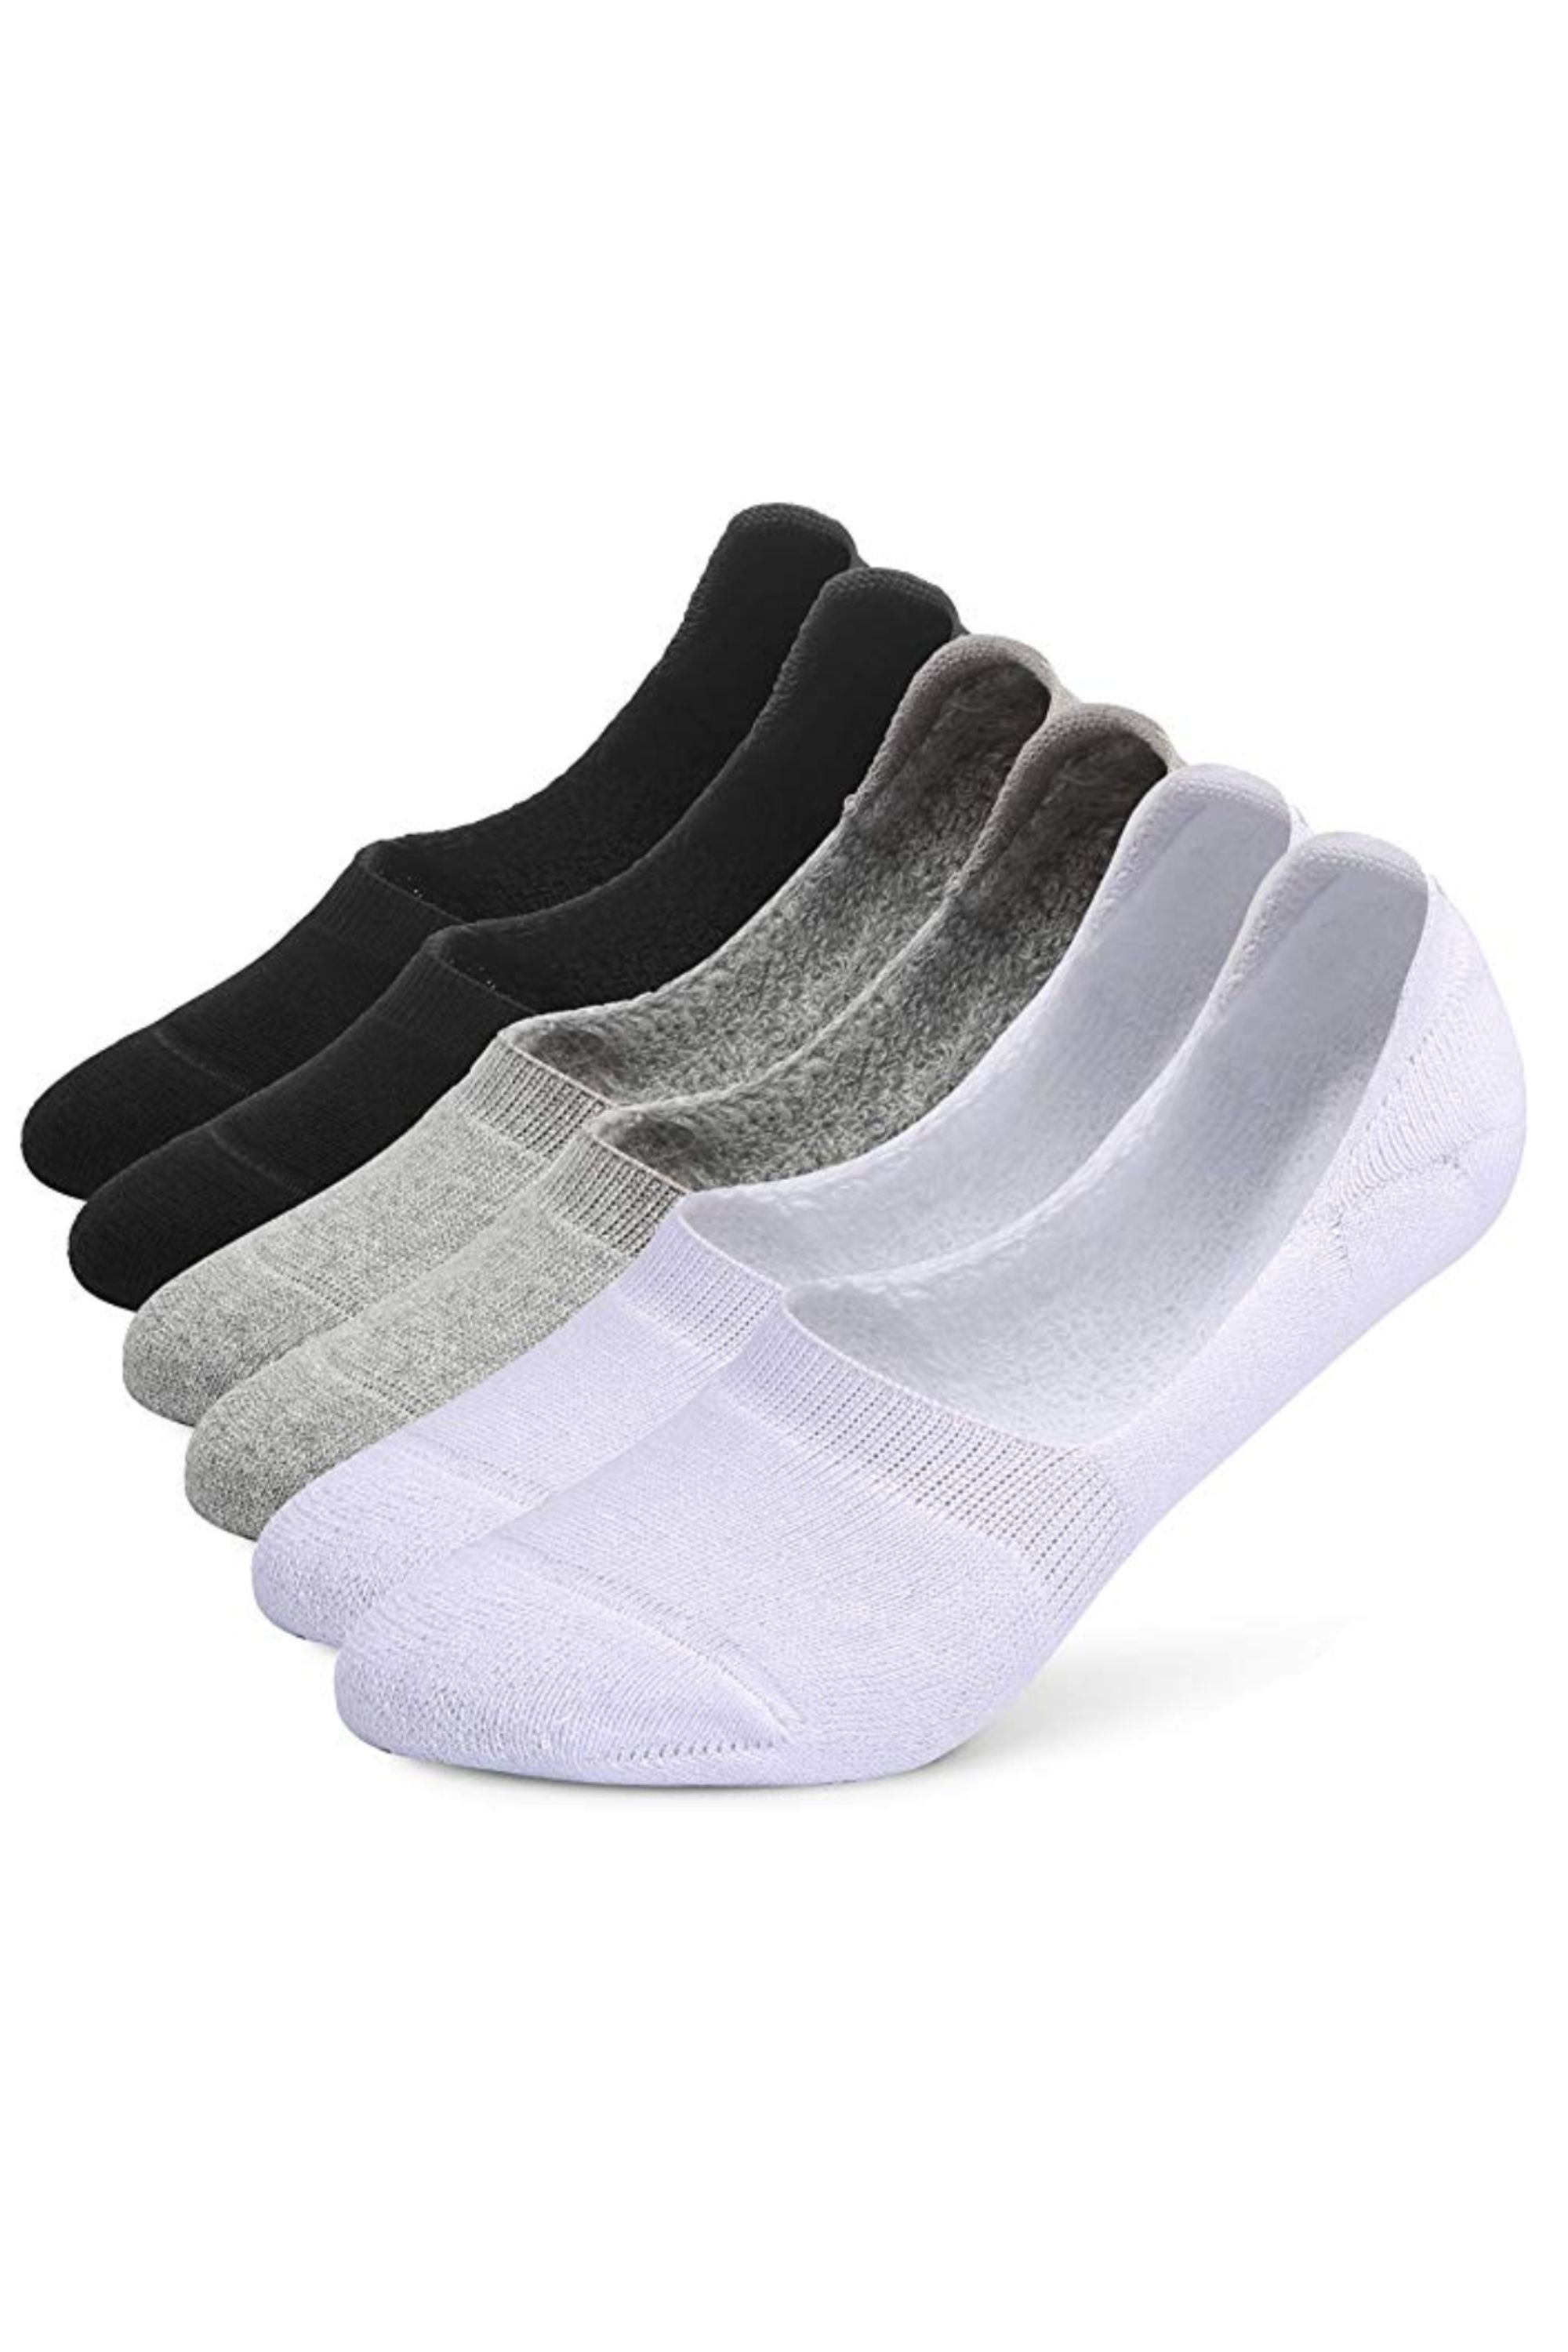 Best No-Show Socks for Women — Hidden 